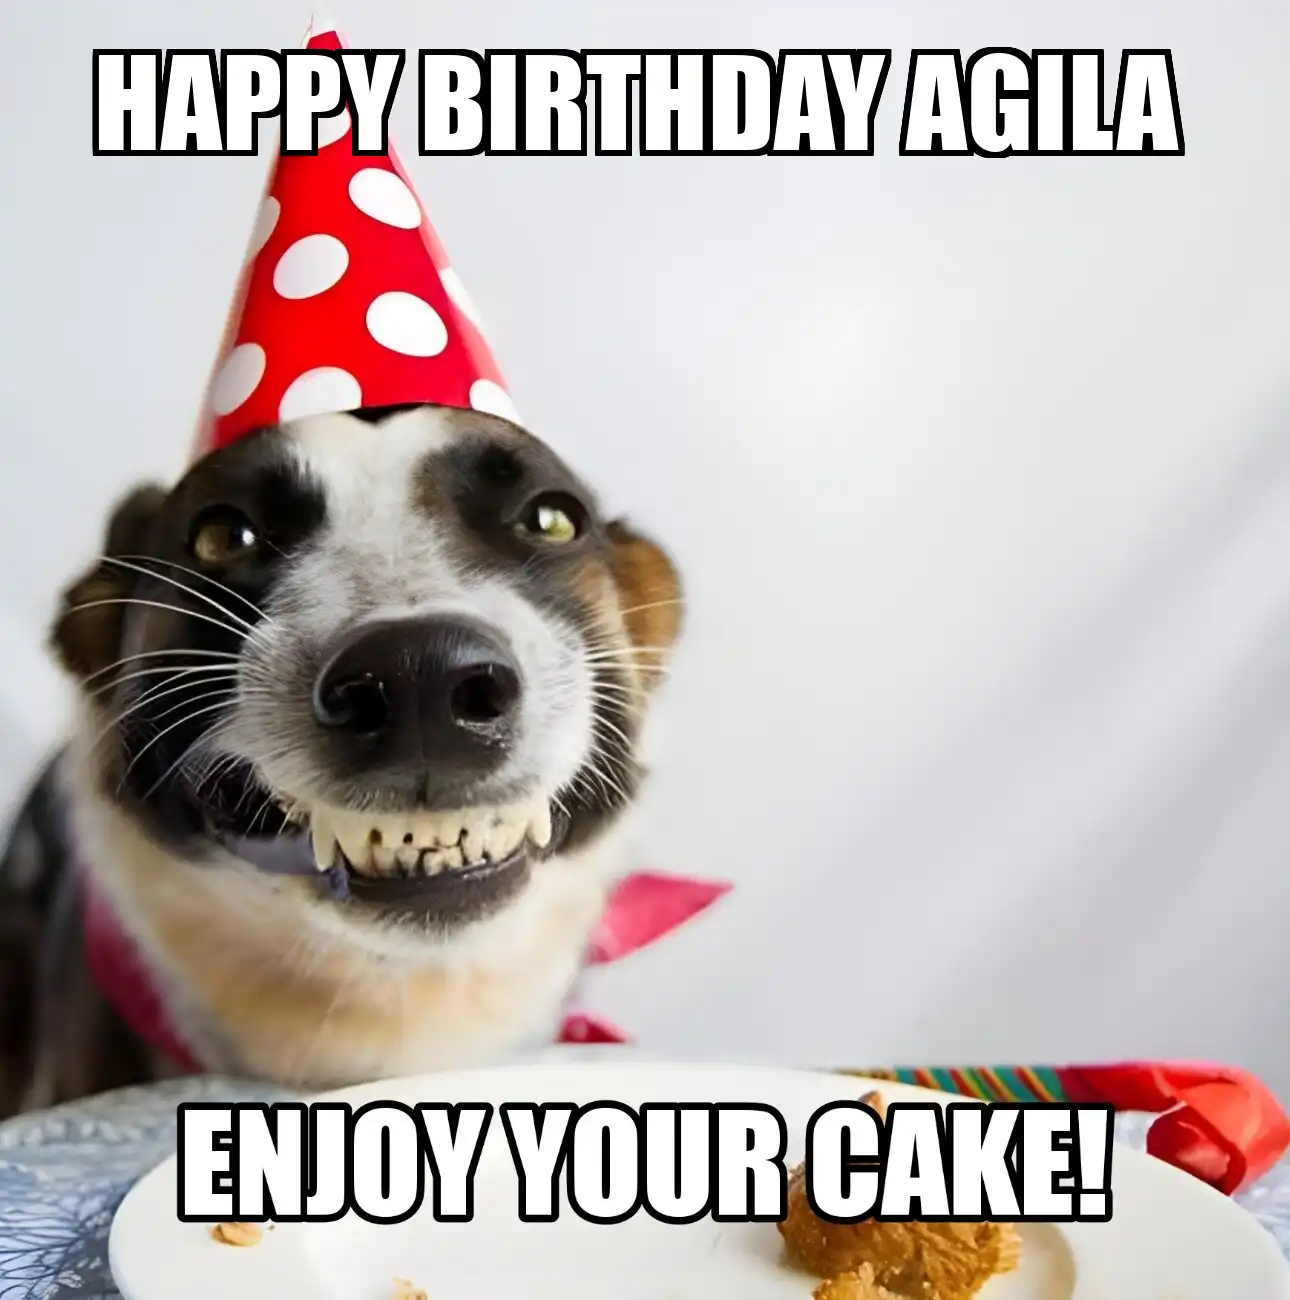 Happy Birthday Agila Enjoy Your Cake Dog Meme